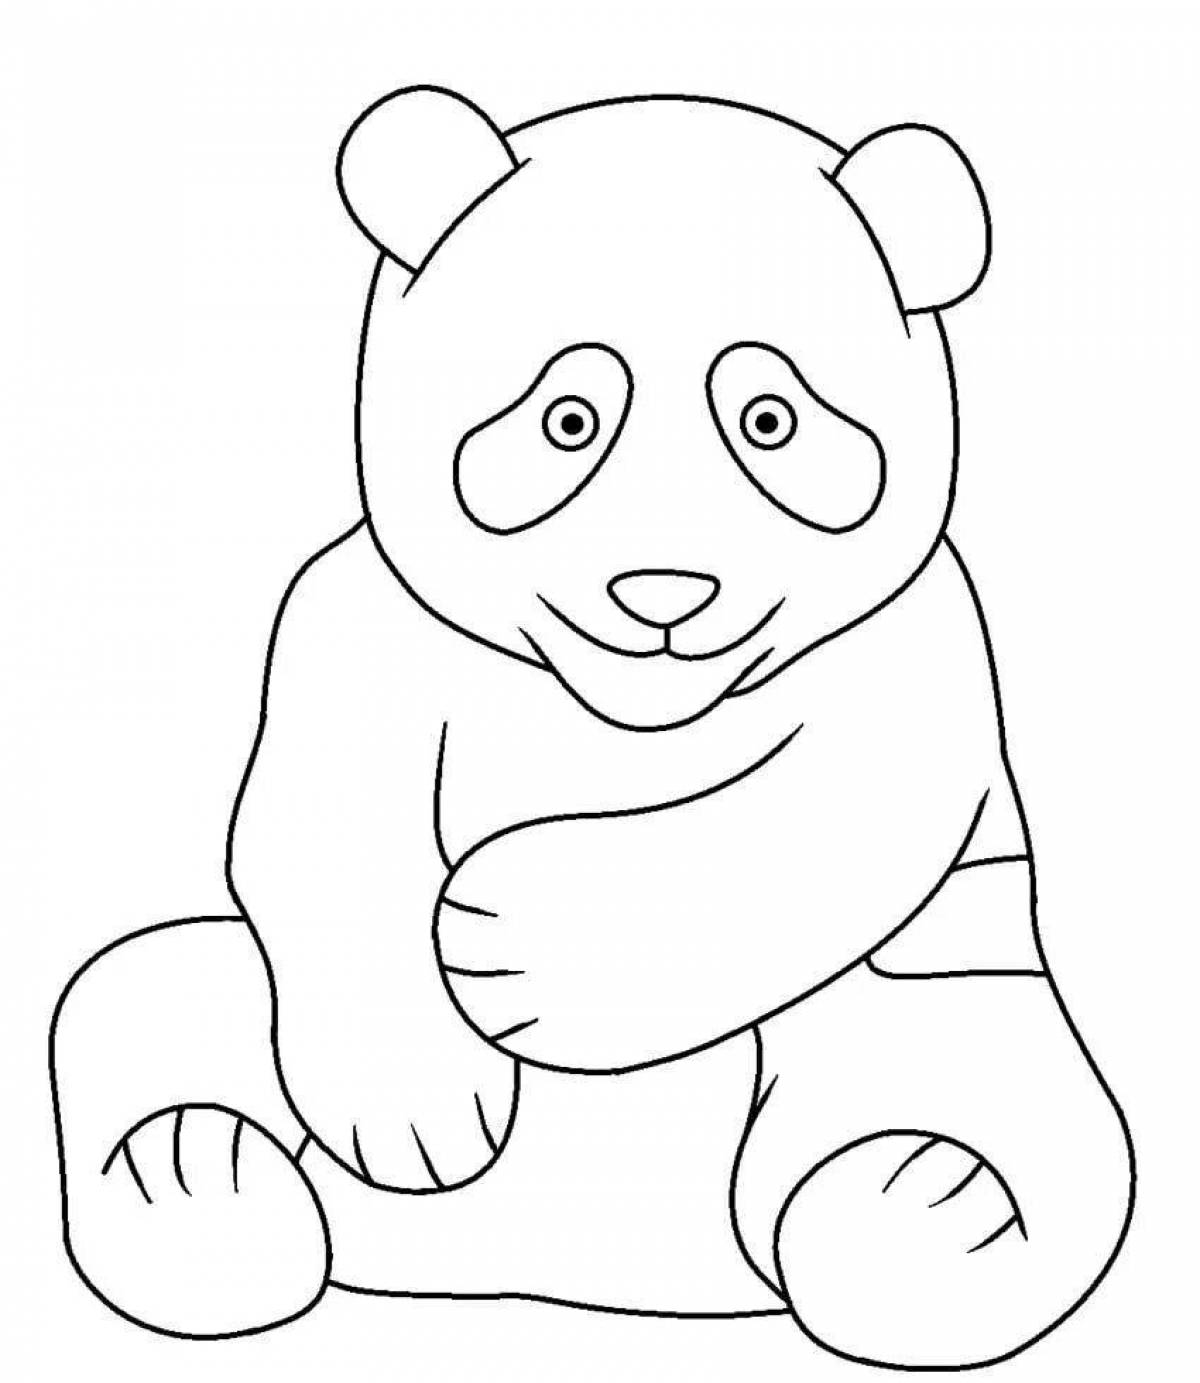 Panda for kids #2